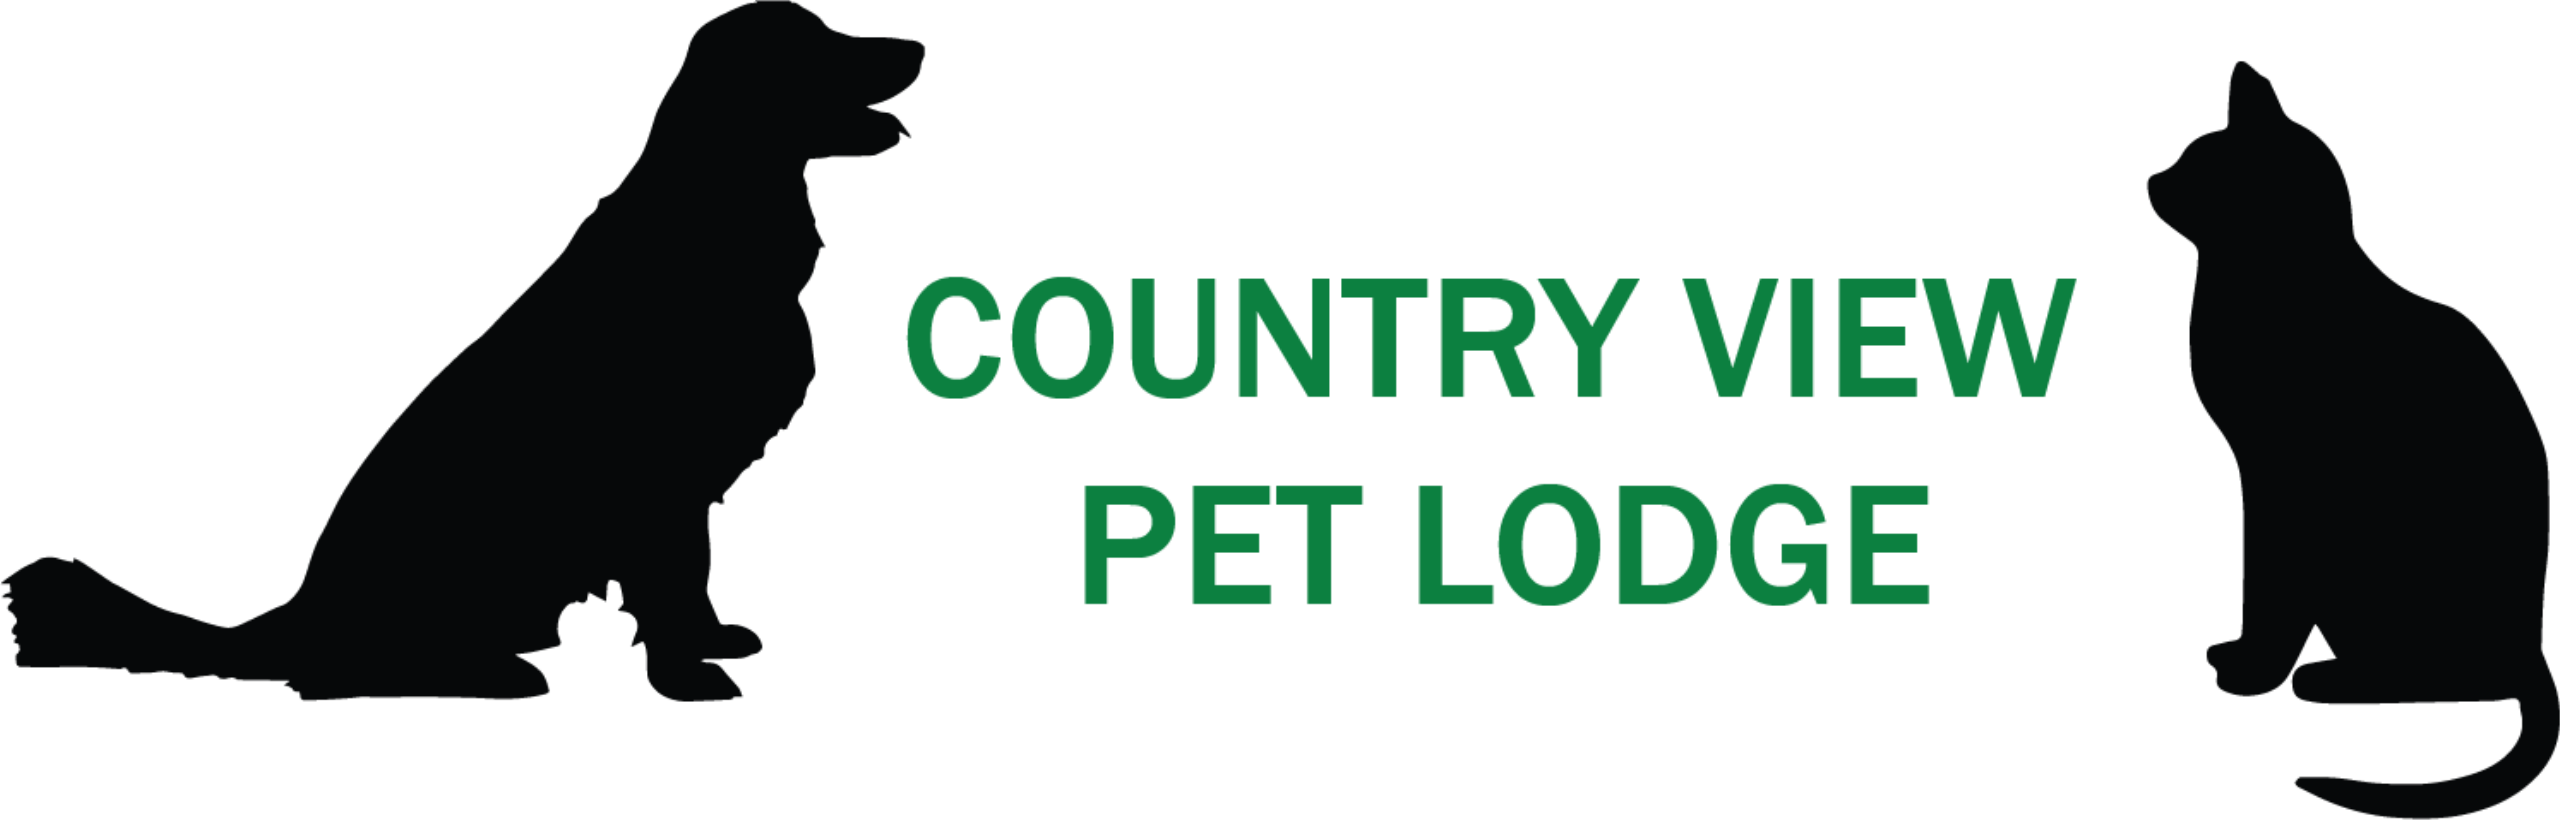 Country View Pet Lodge, LLC Logo